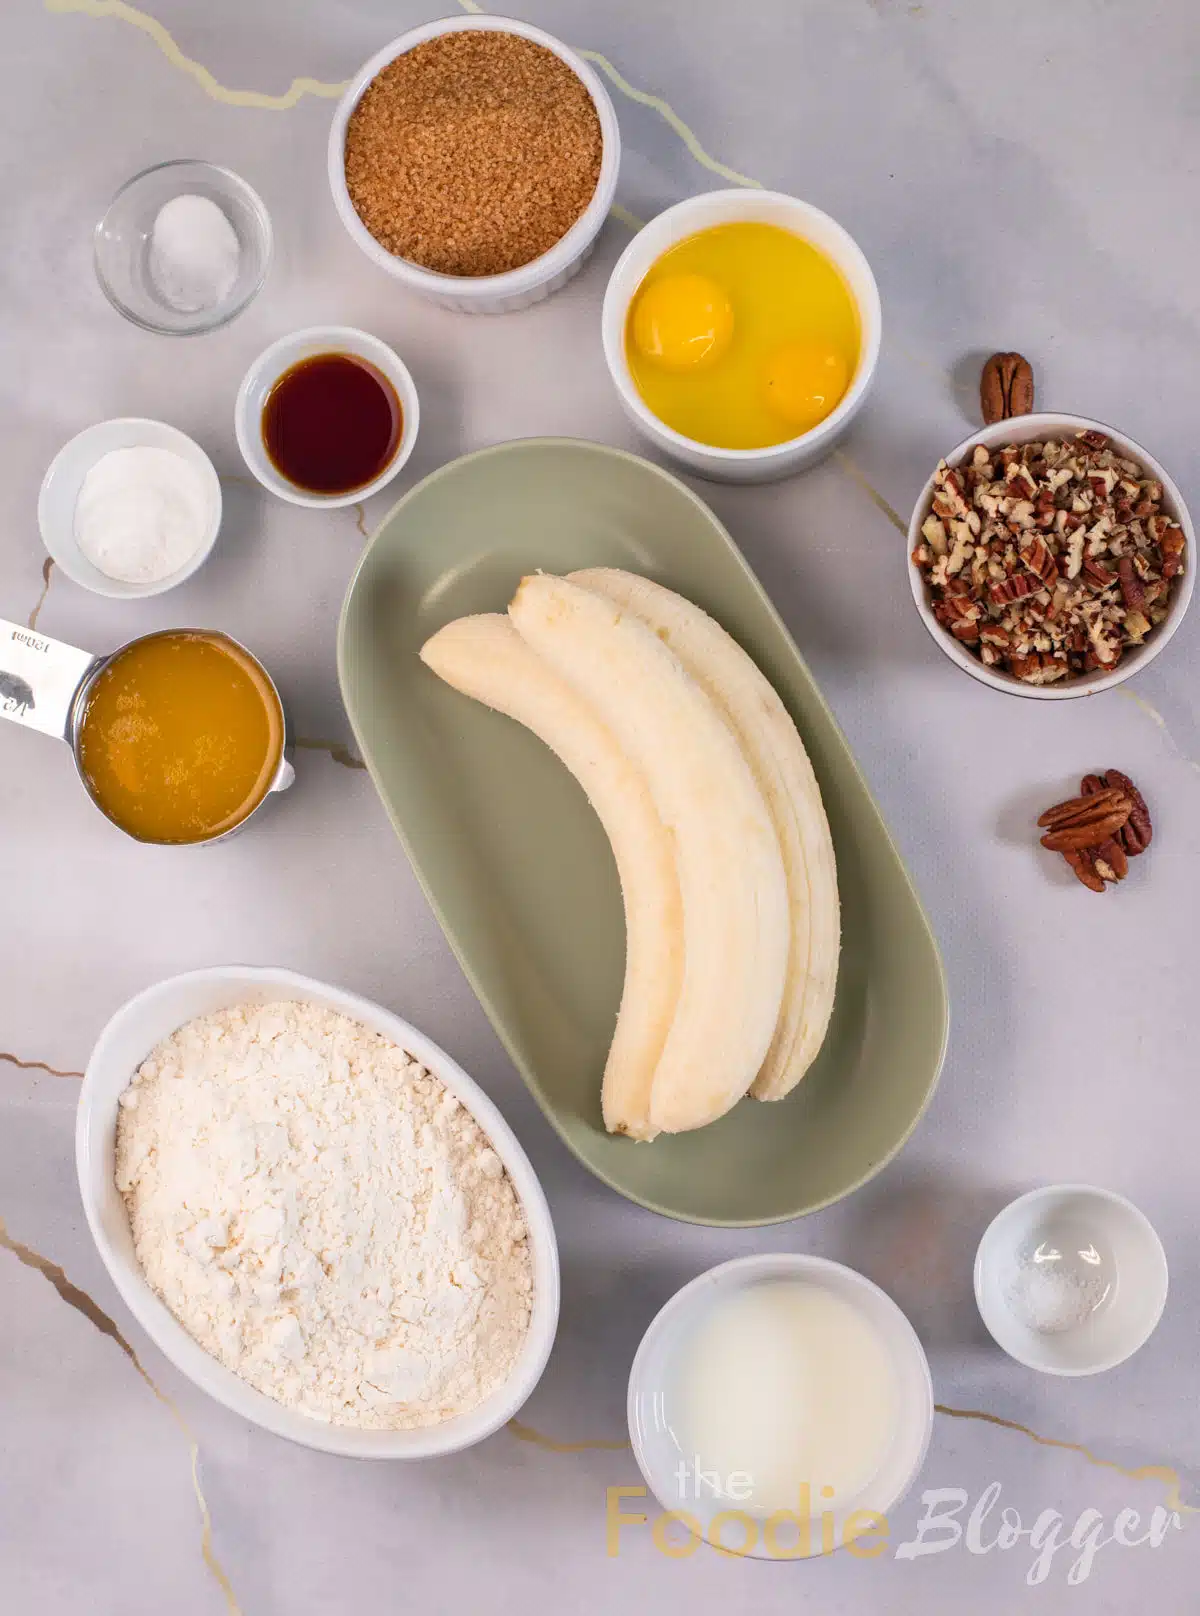 thefoodieblogger banana nut muffins ingredients